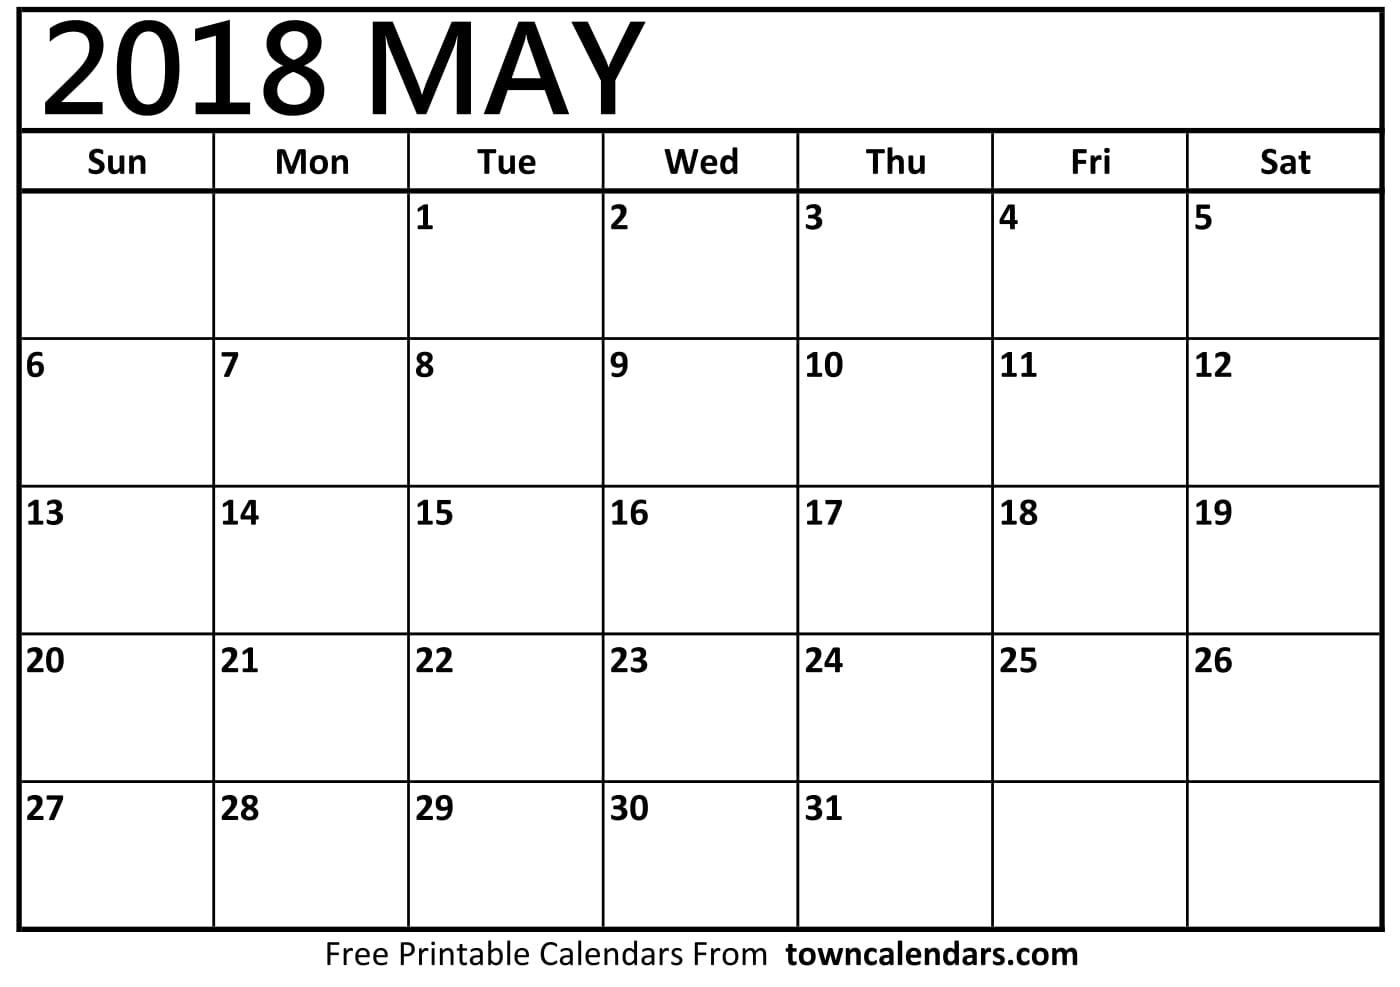 starfall calendar may 2018